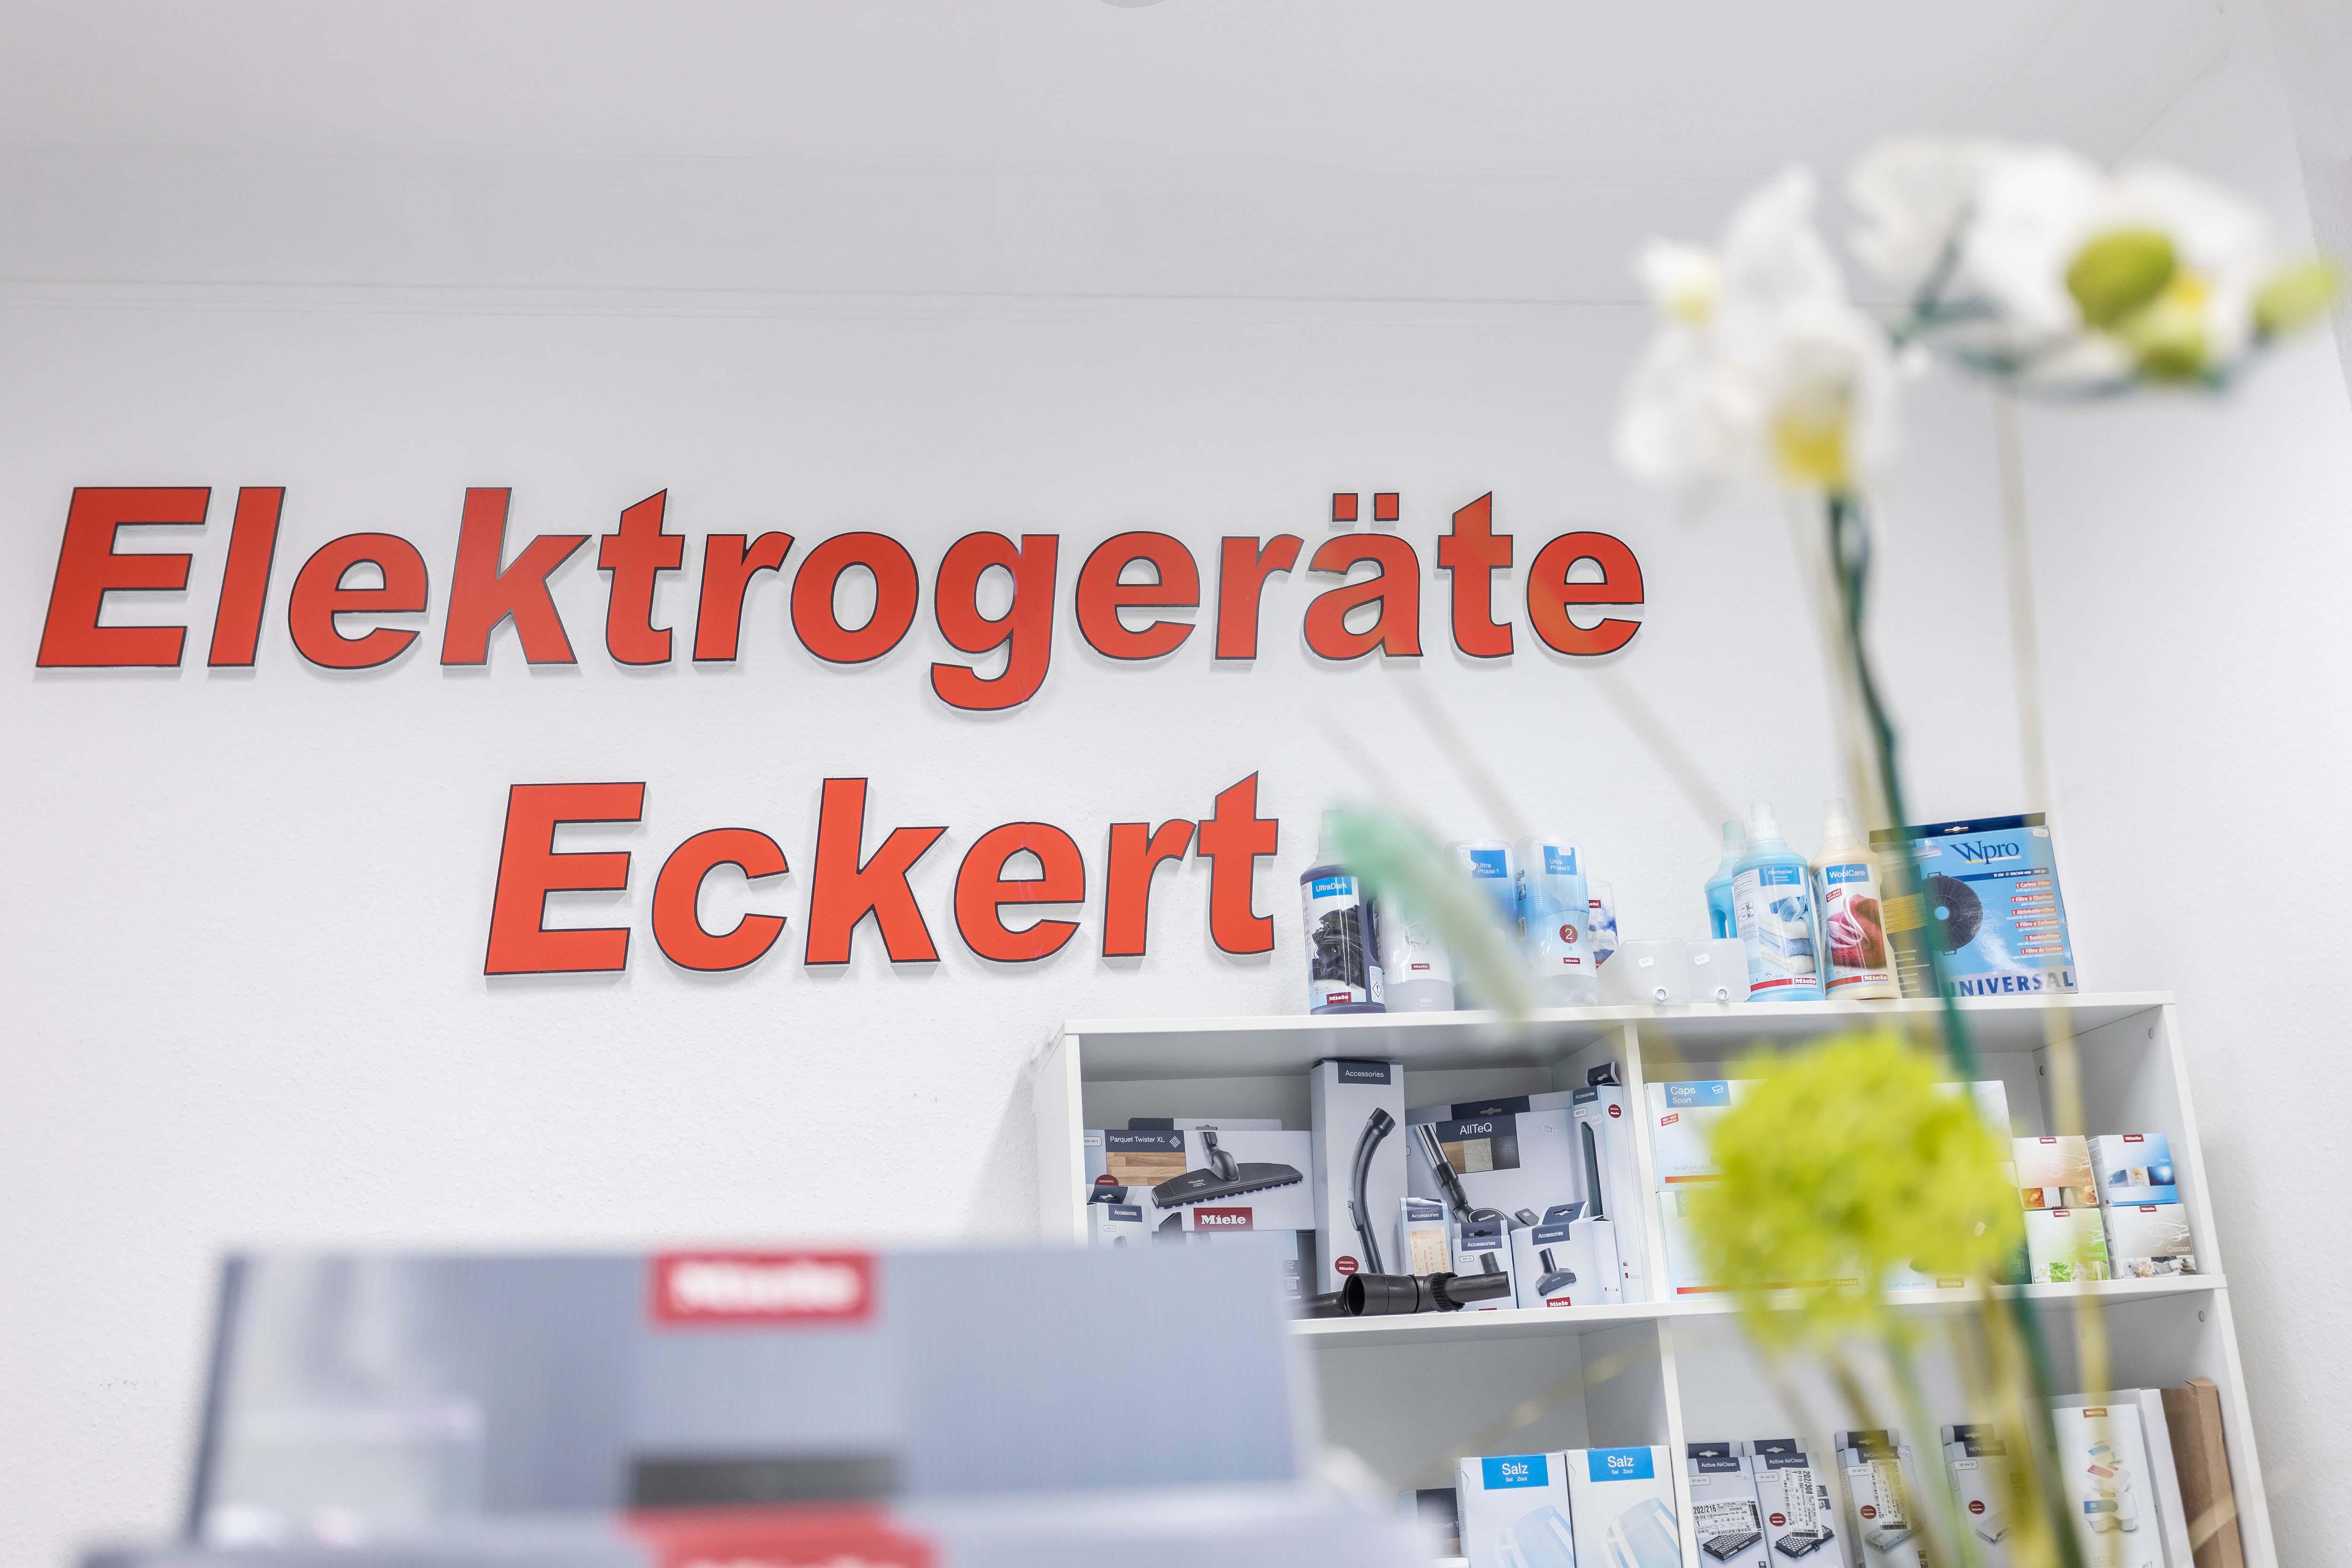 Elektrogeräte Eckert, Ehrenfeldgürtel 153 in Köln